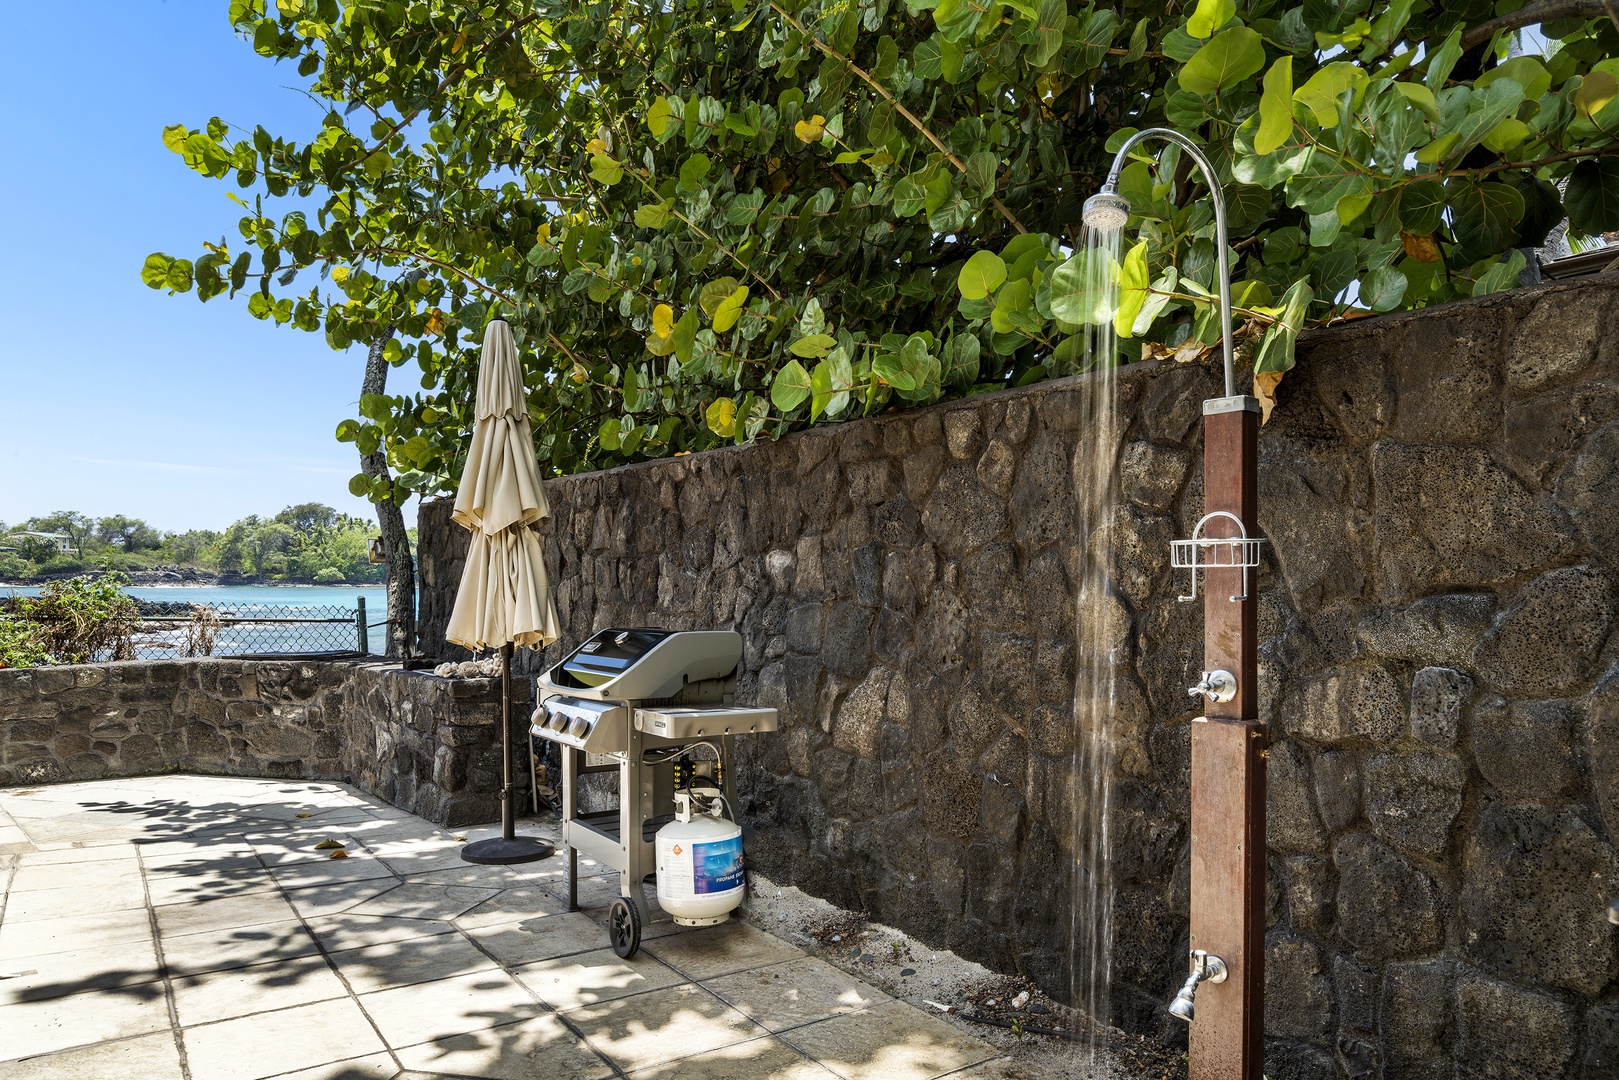 Kailua Kona Vacation Rentals, Kona's Shangri La - Outdoor shower to rinse off after the beach